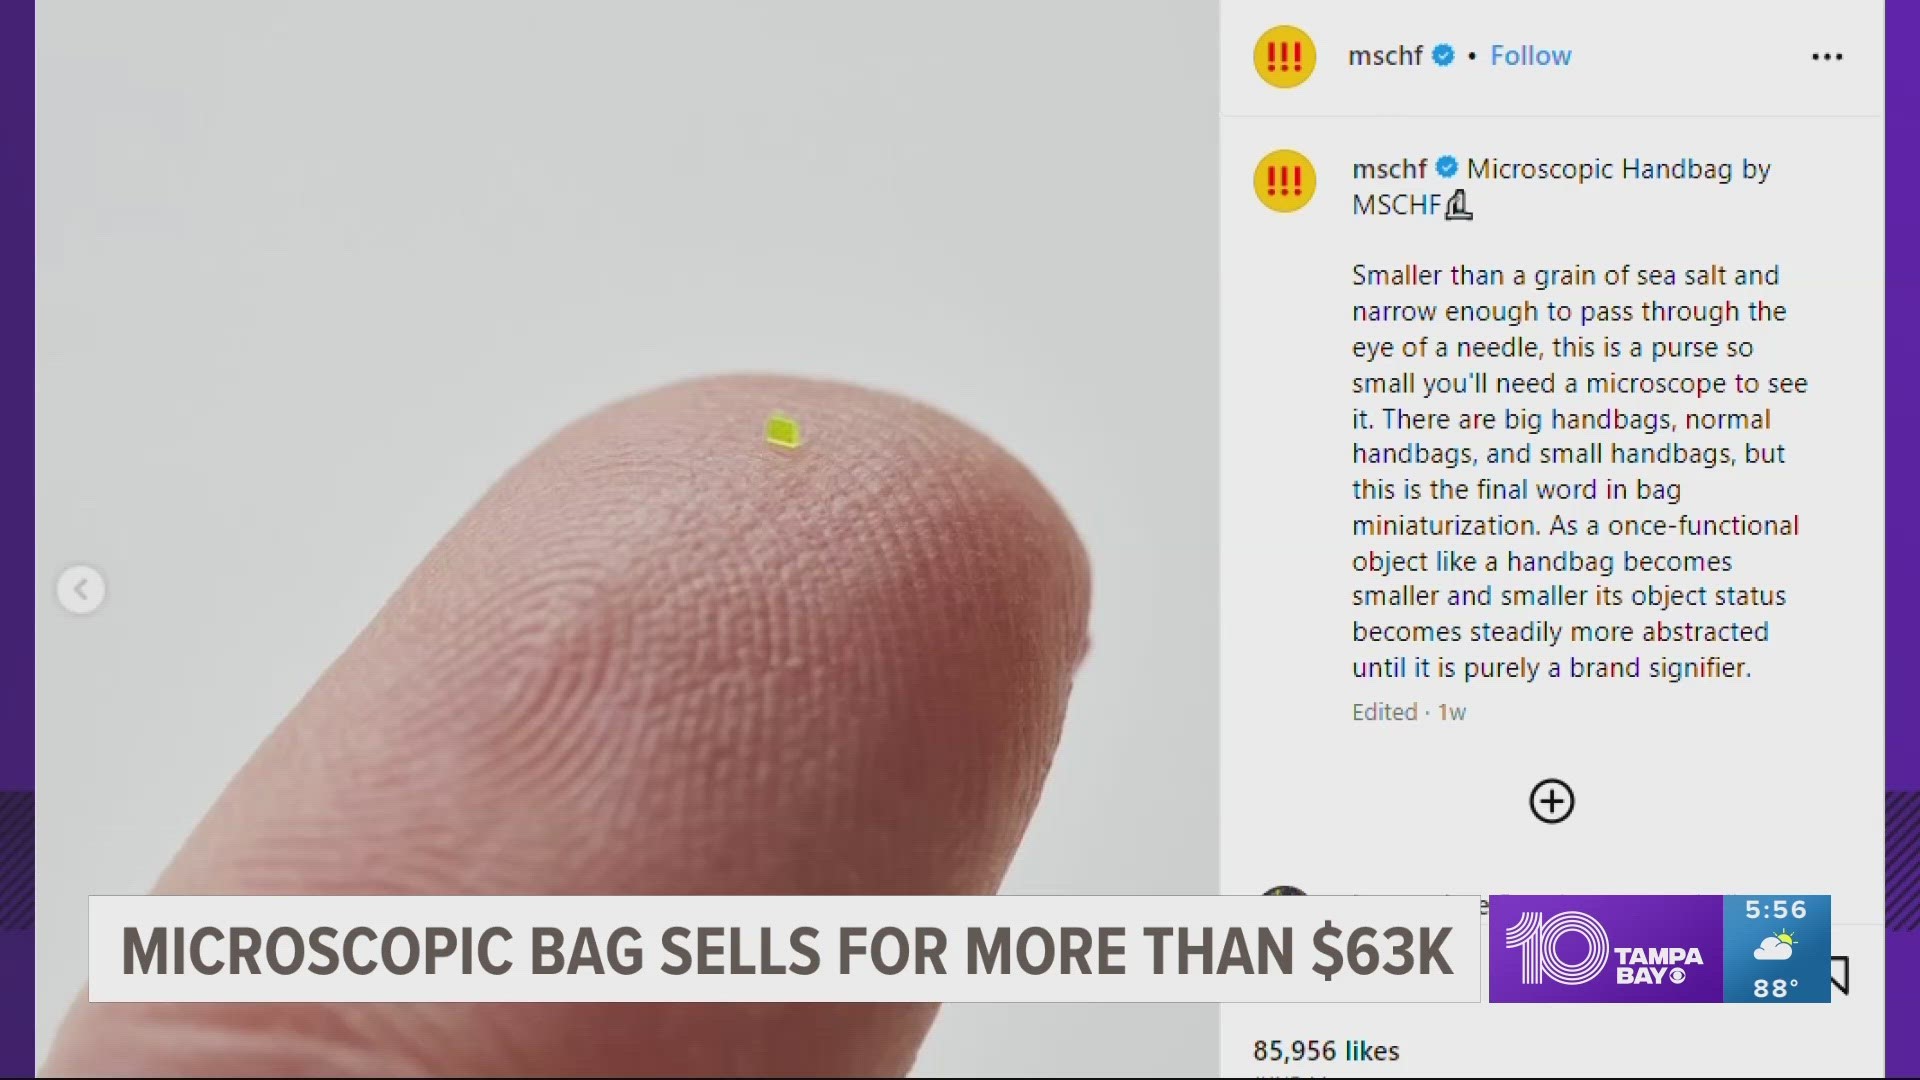 Microscopic handbag 'smaller than grain of salt' sells for more